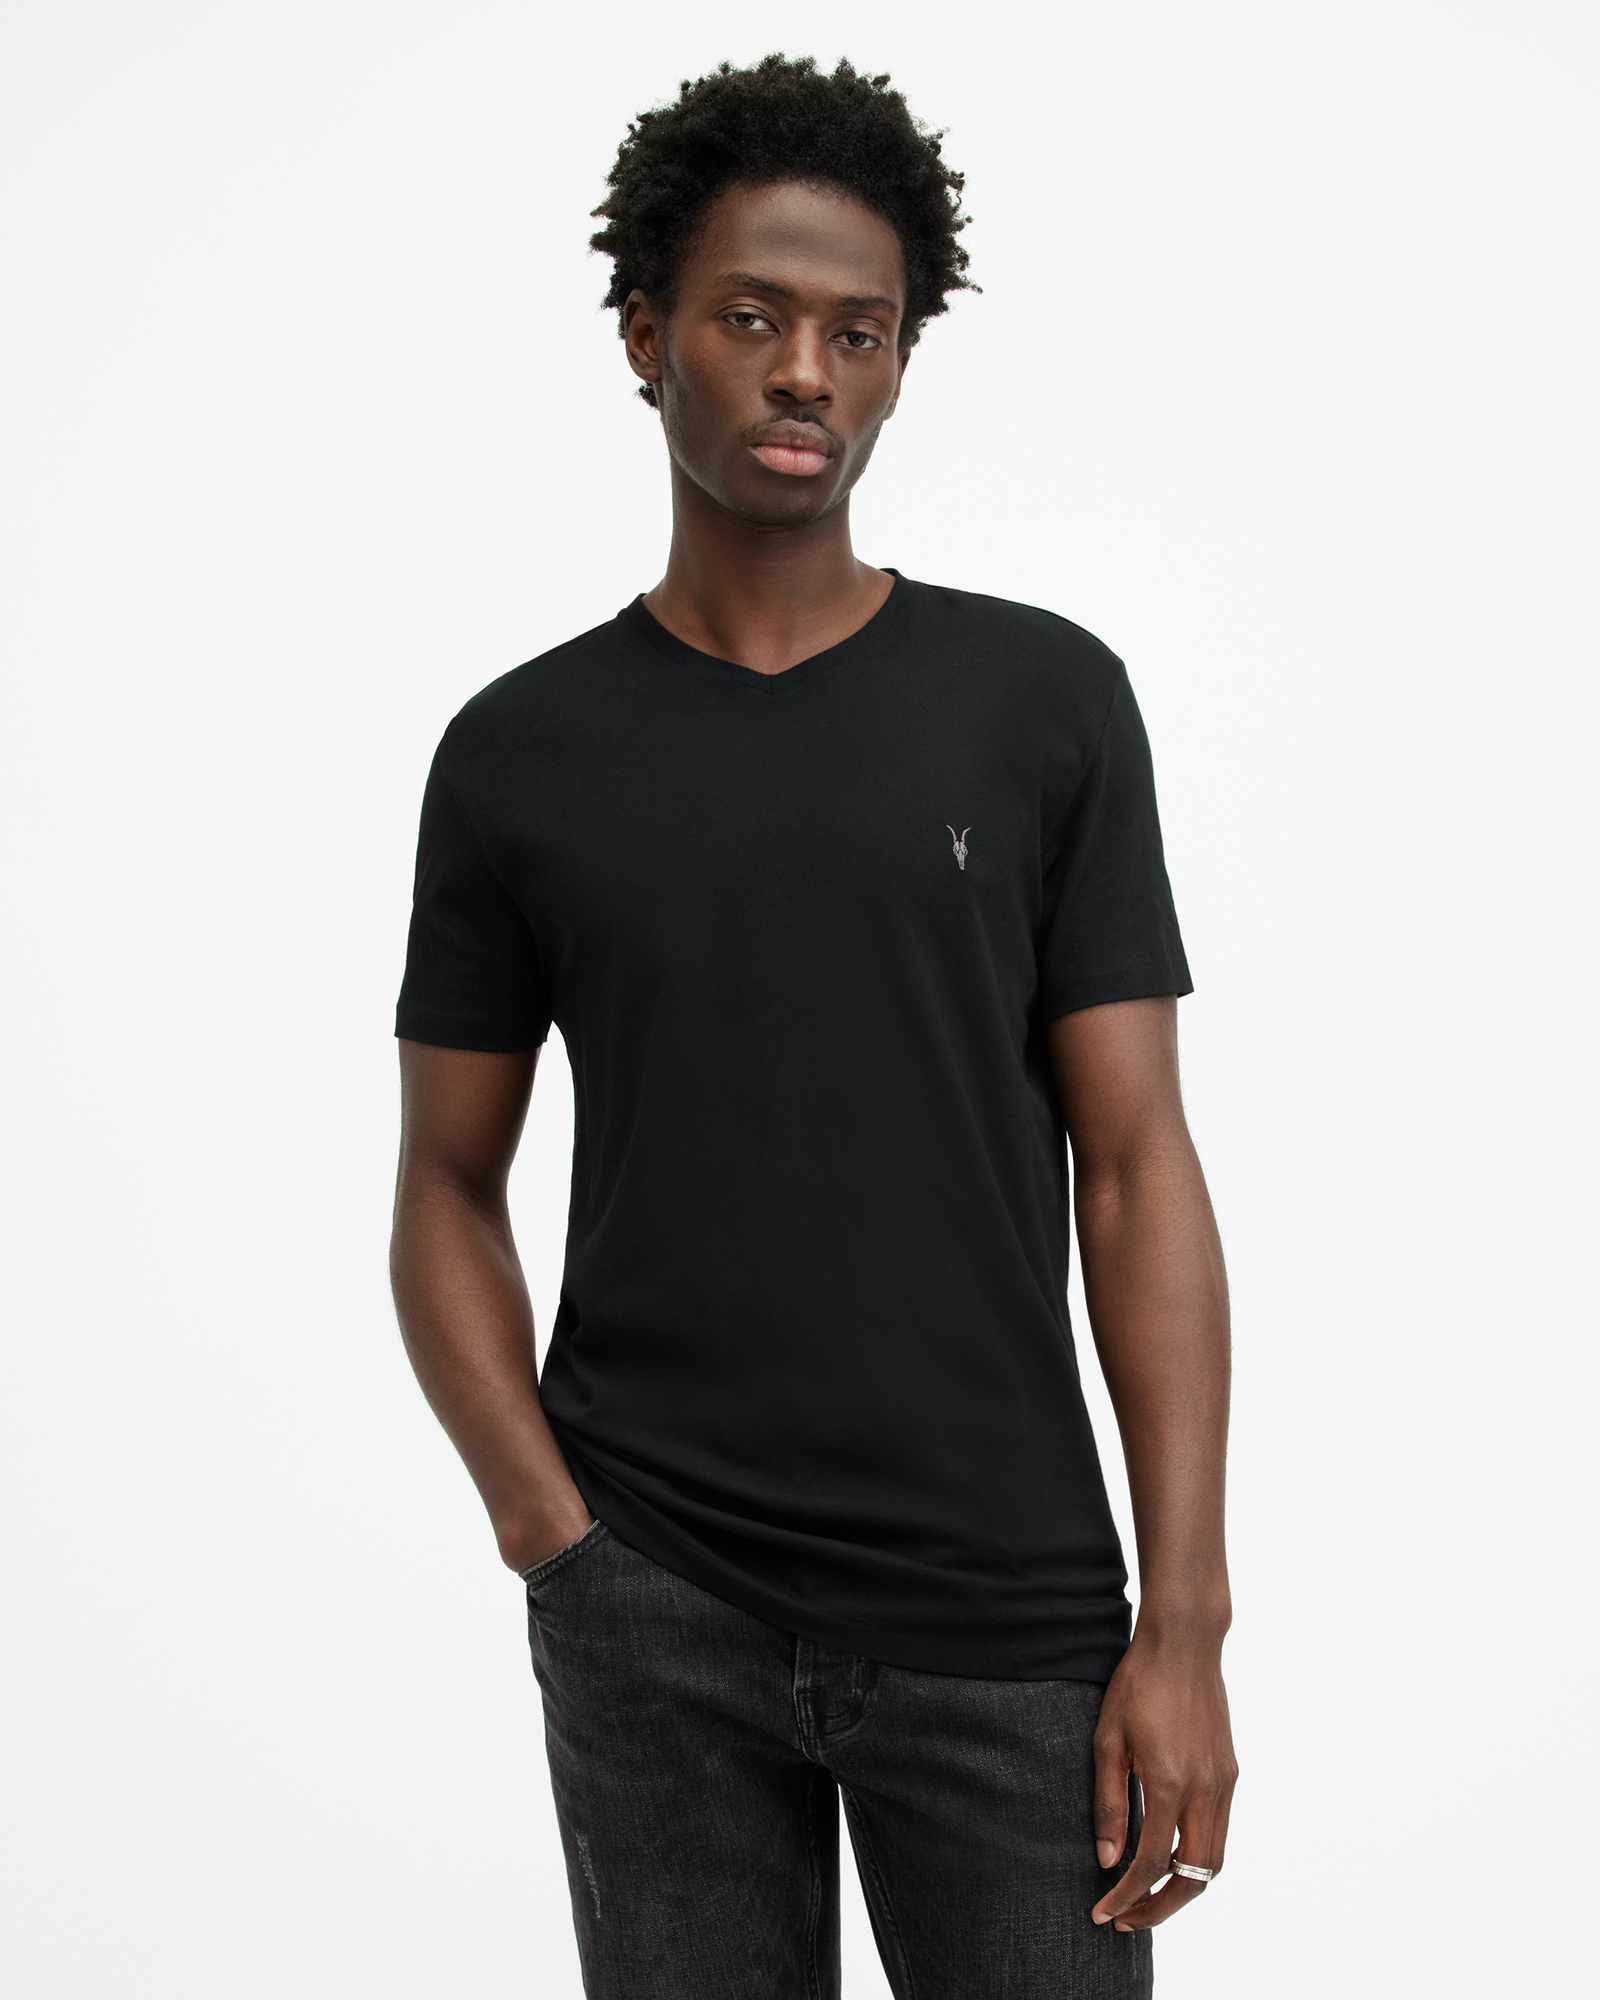 AllSaints Men's Lightweight Tonic V-Neck T-Shirt, Black, Size: S